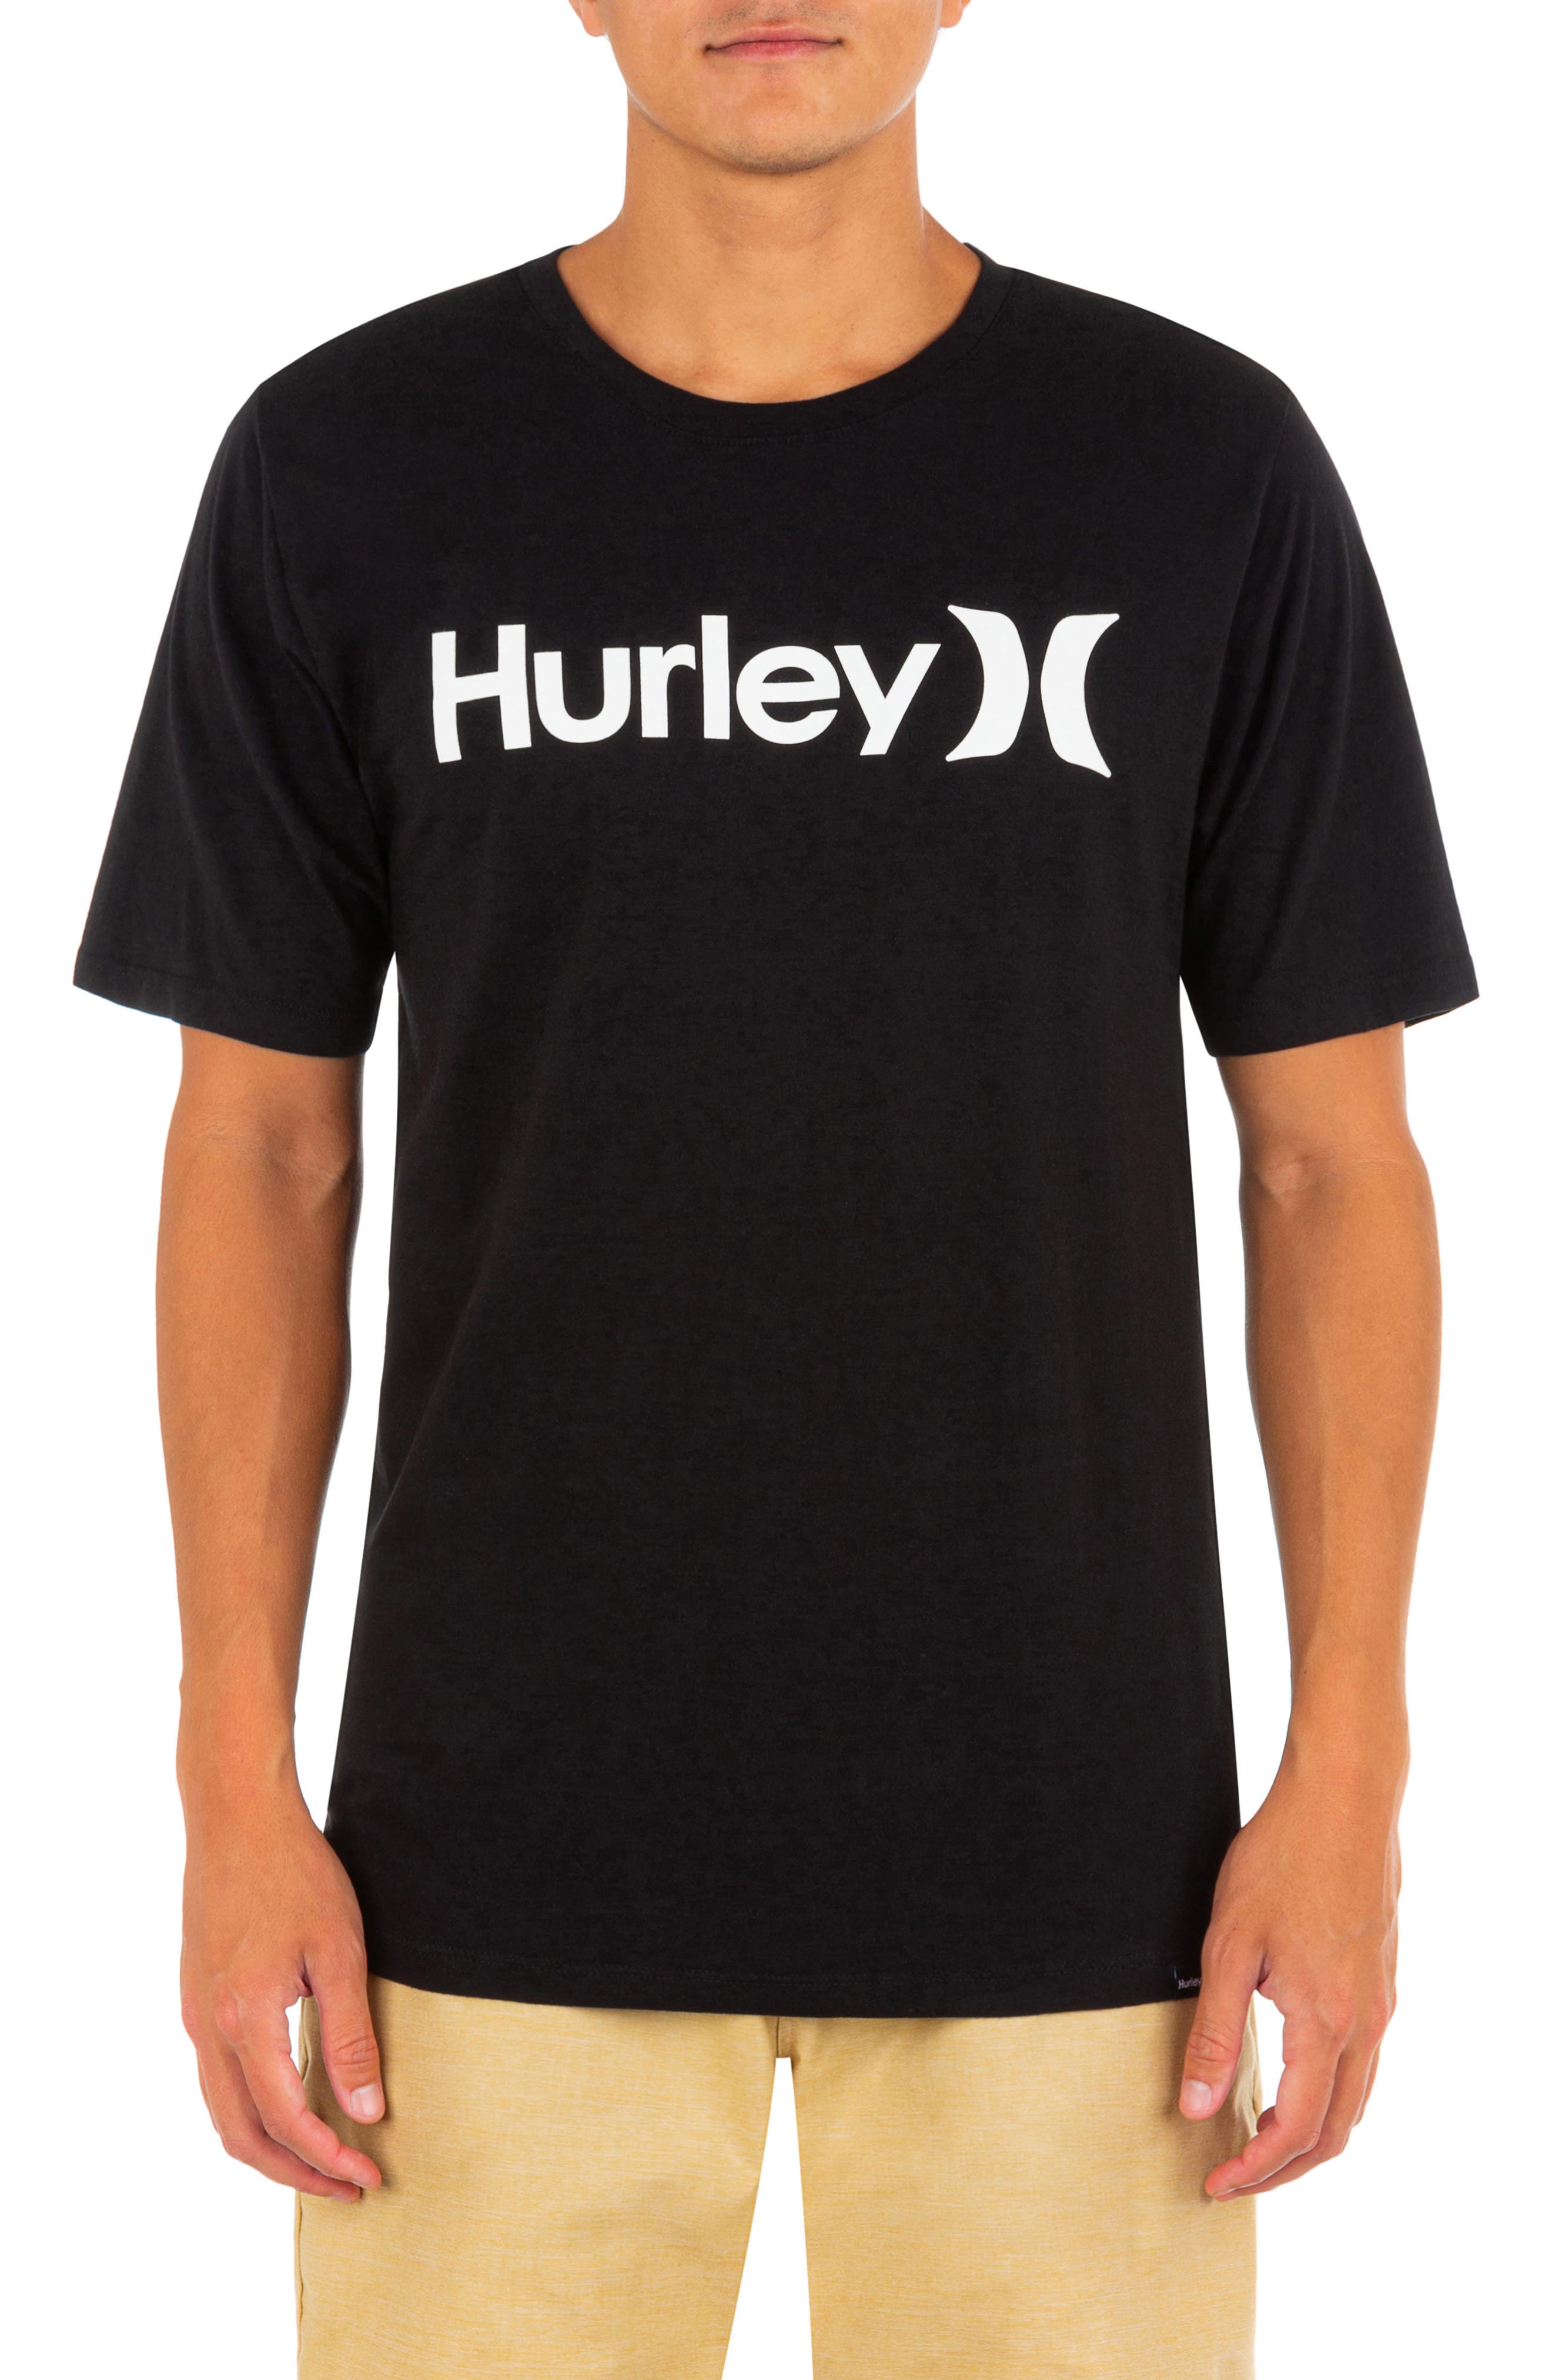 Hurley Mens Purple T Shirt Small Short Sleeve 100% Cotton Crew Neck New 